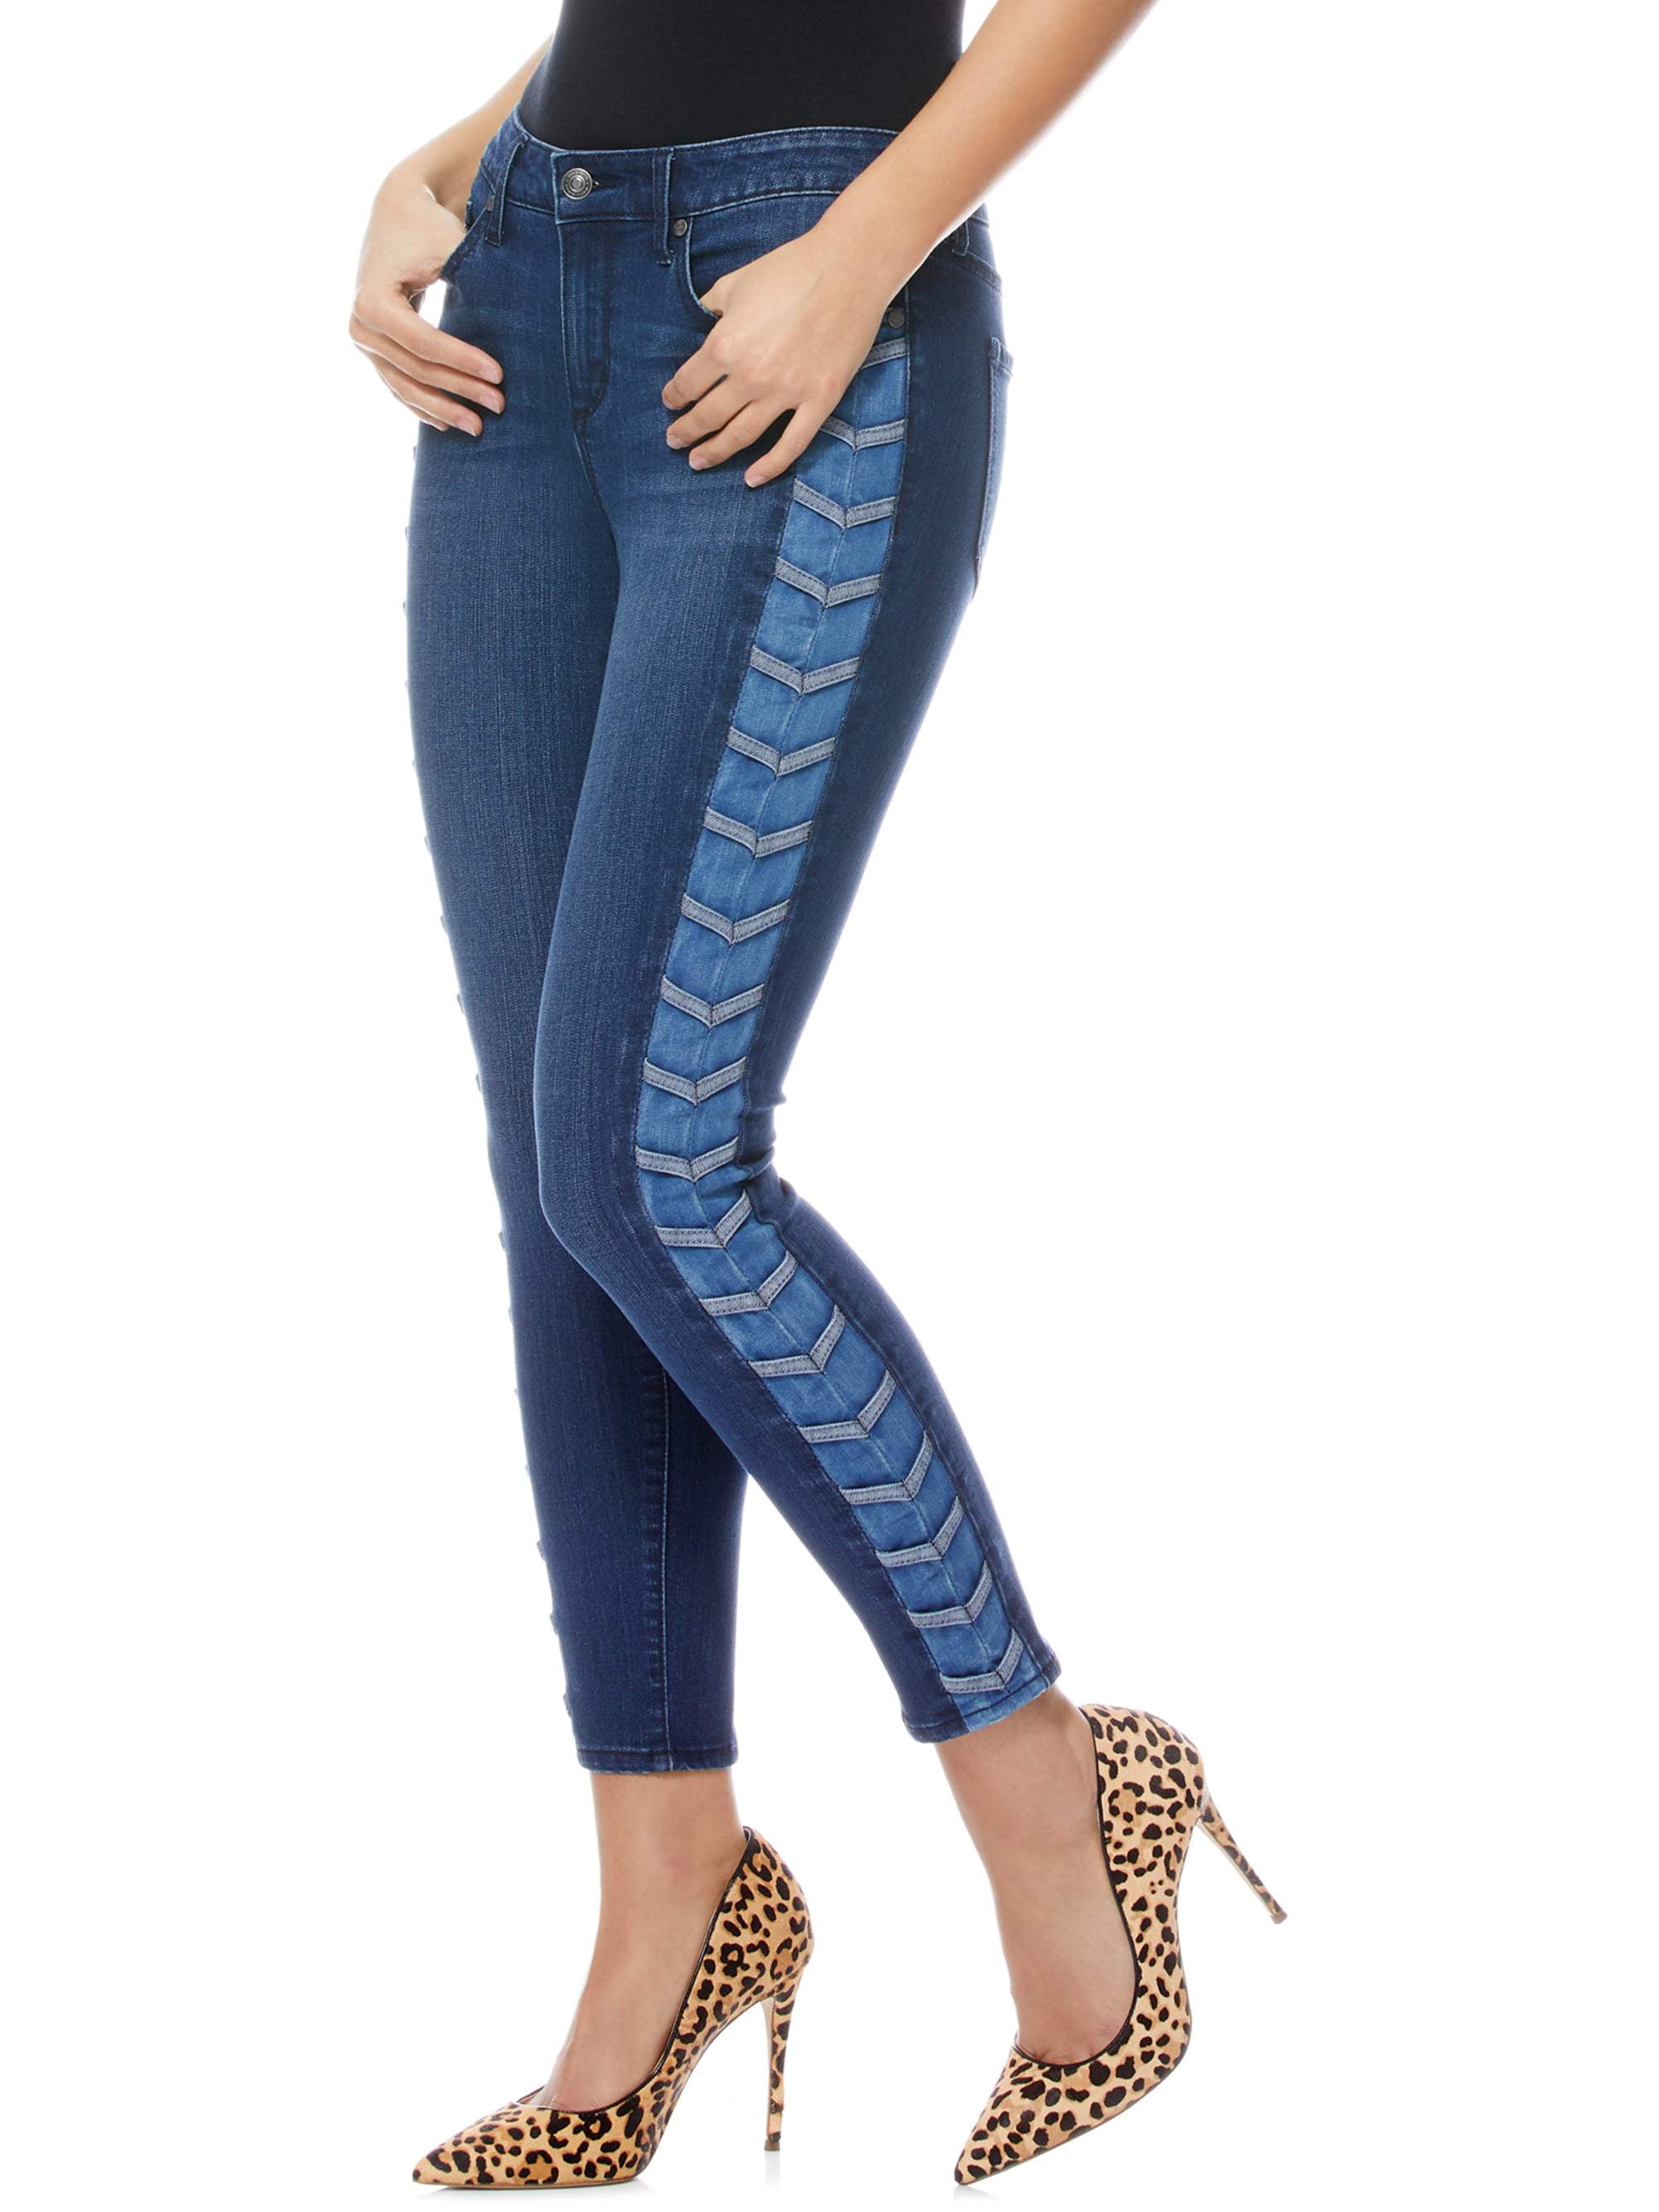 Sofia Vergara's Walmart Skinny Jeans & Bodysuit Offset Her Louboutins